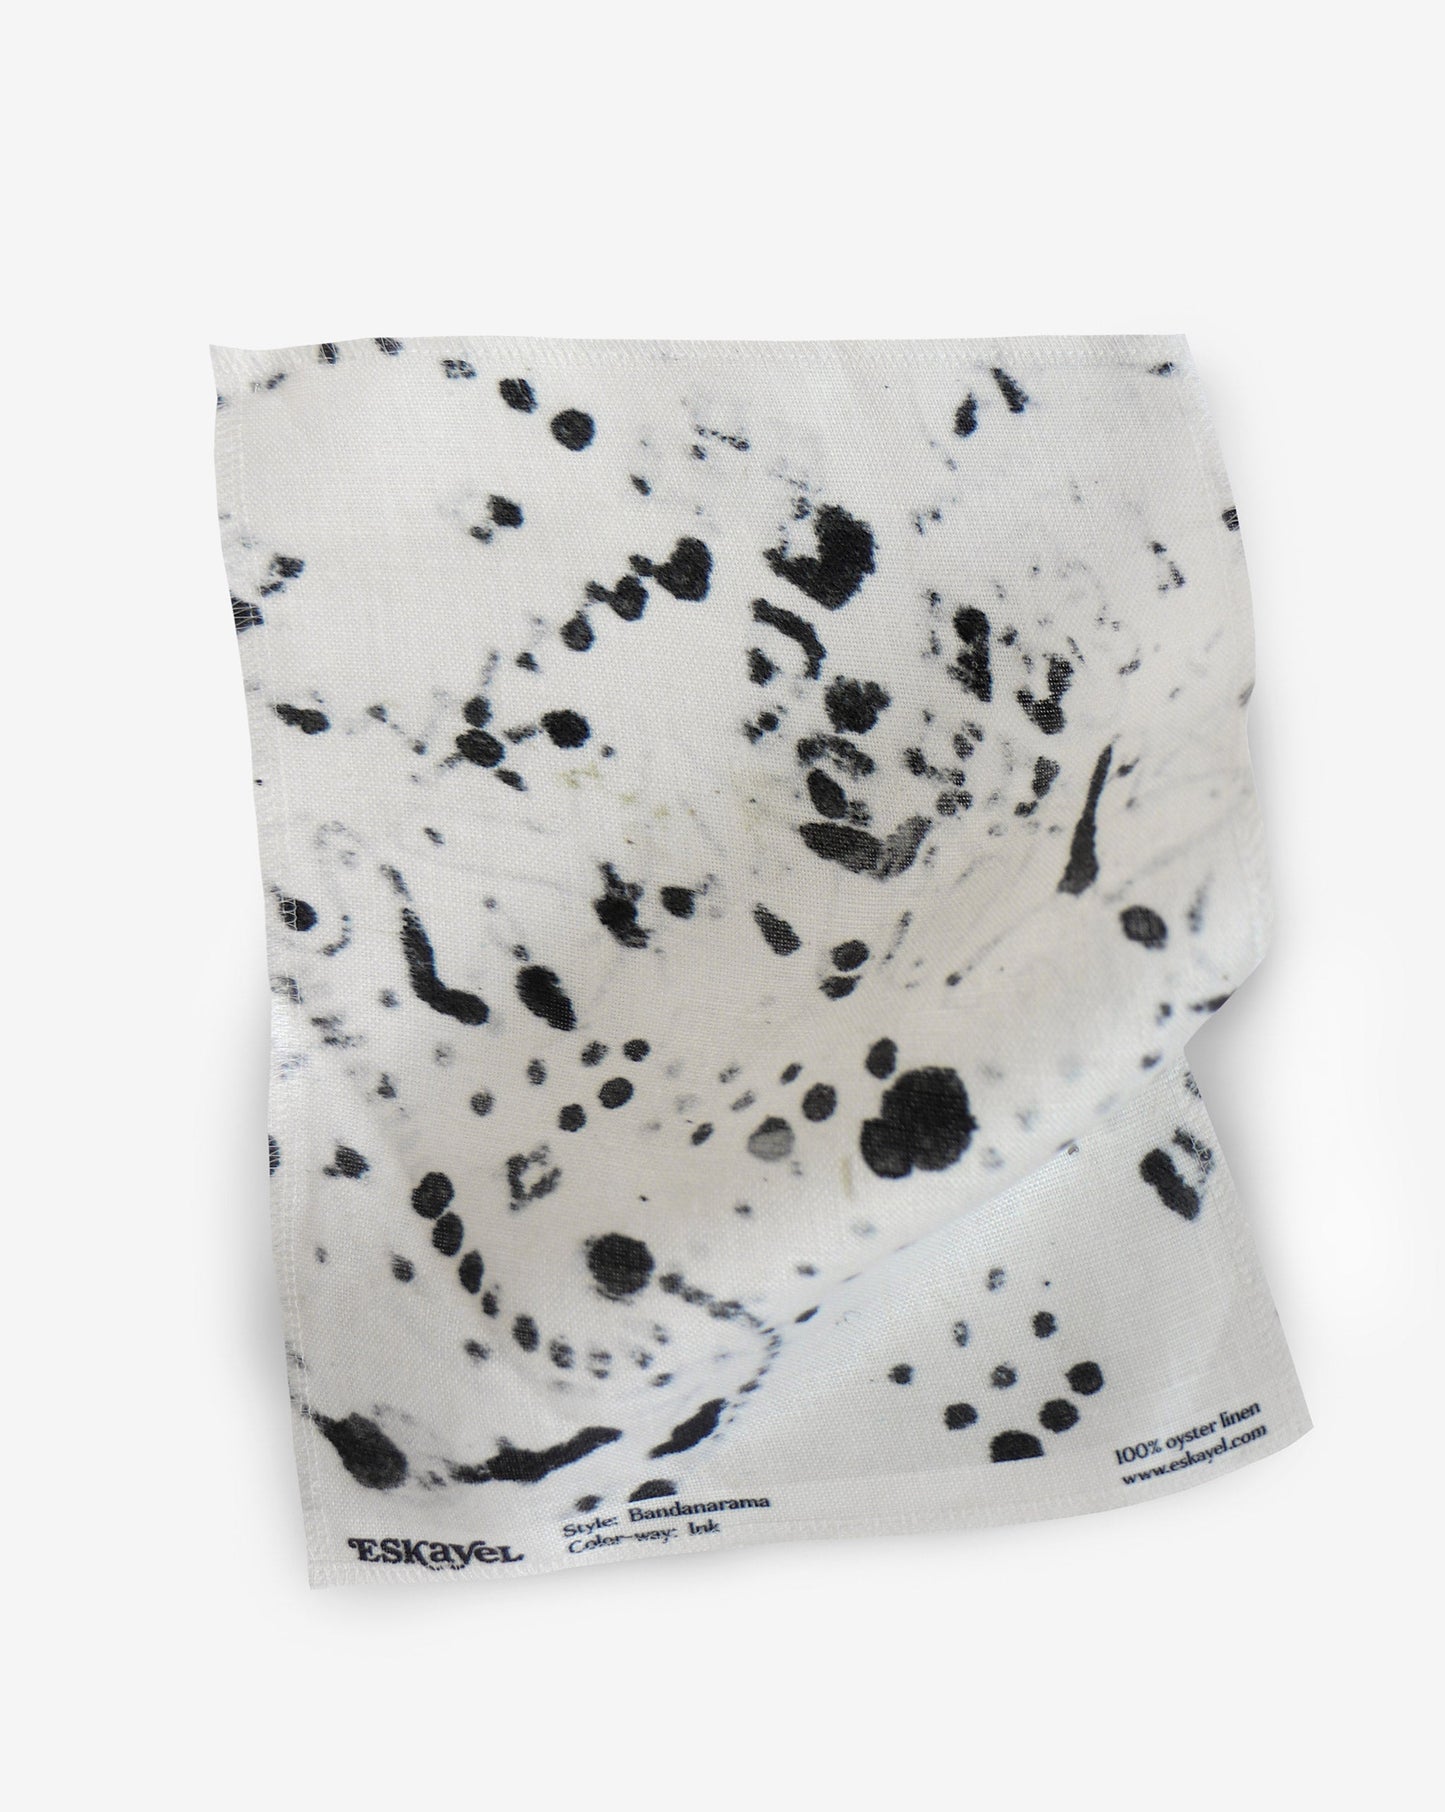 Order a sample of a Bandanarama Fabric Sample||Ink on a white surface.